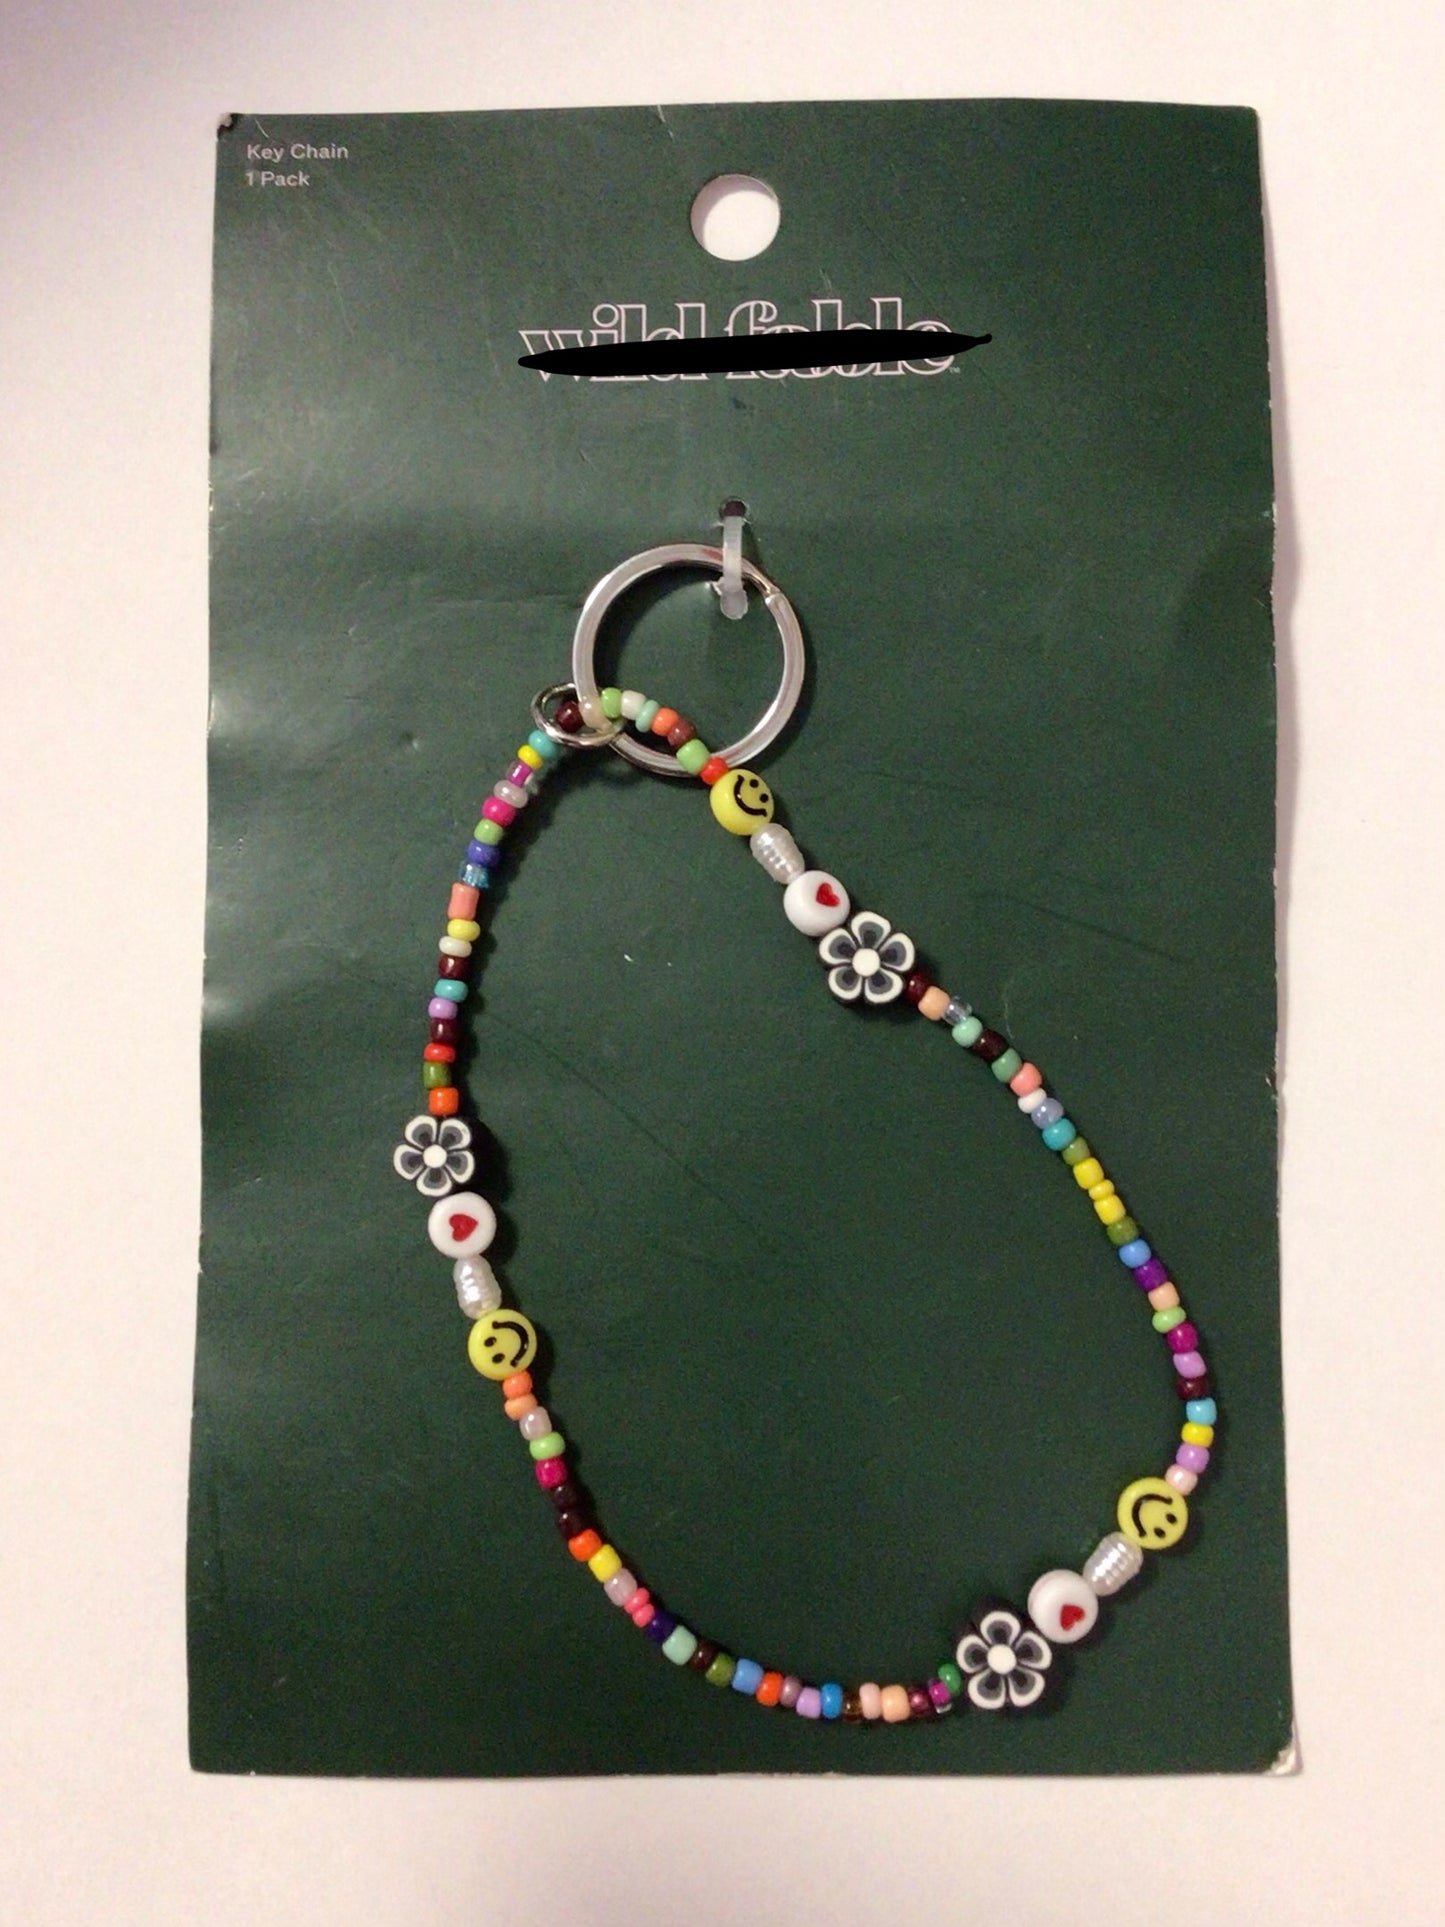 Keychain - Beads